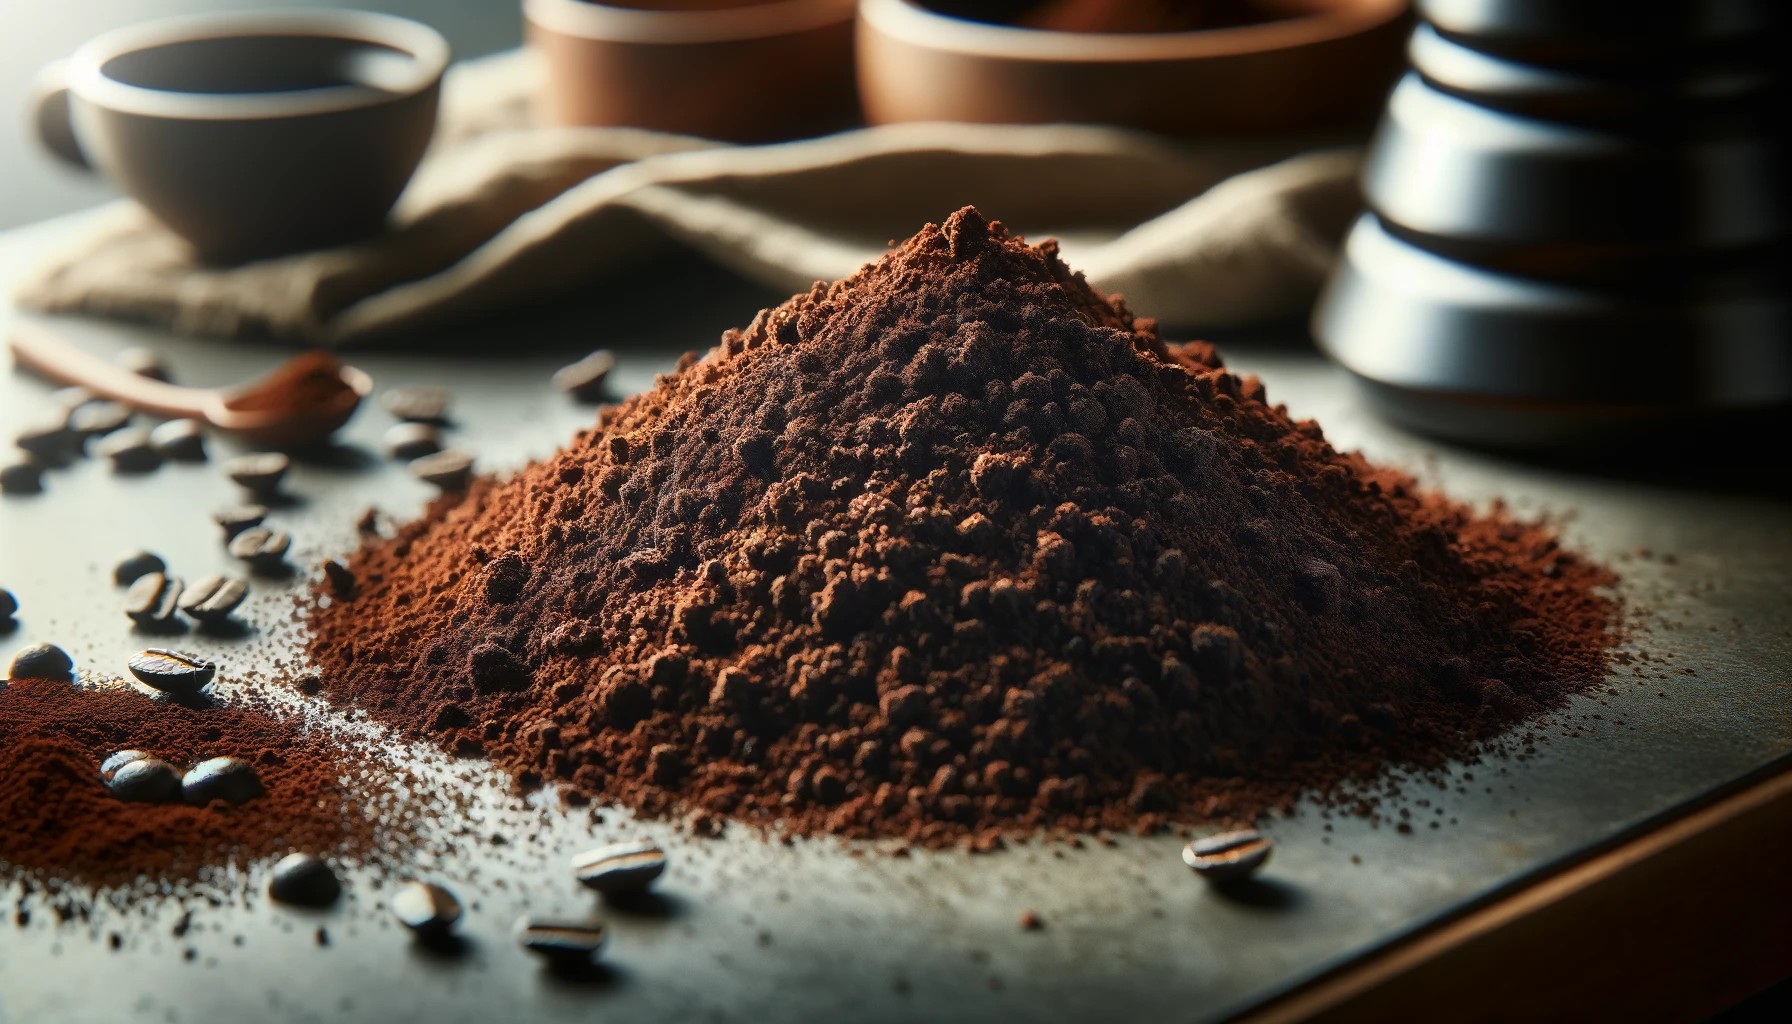 研磨 磨豆機 萃取 法壓壺 烘焙 咖啡粉 義式咖啡 Grinding Grinder Extraction French Press Roasting Coffee Powder Italian Coffee